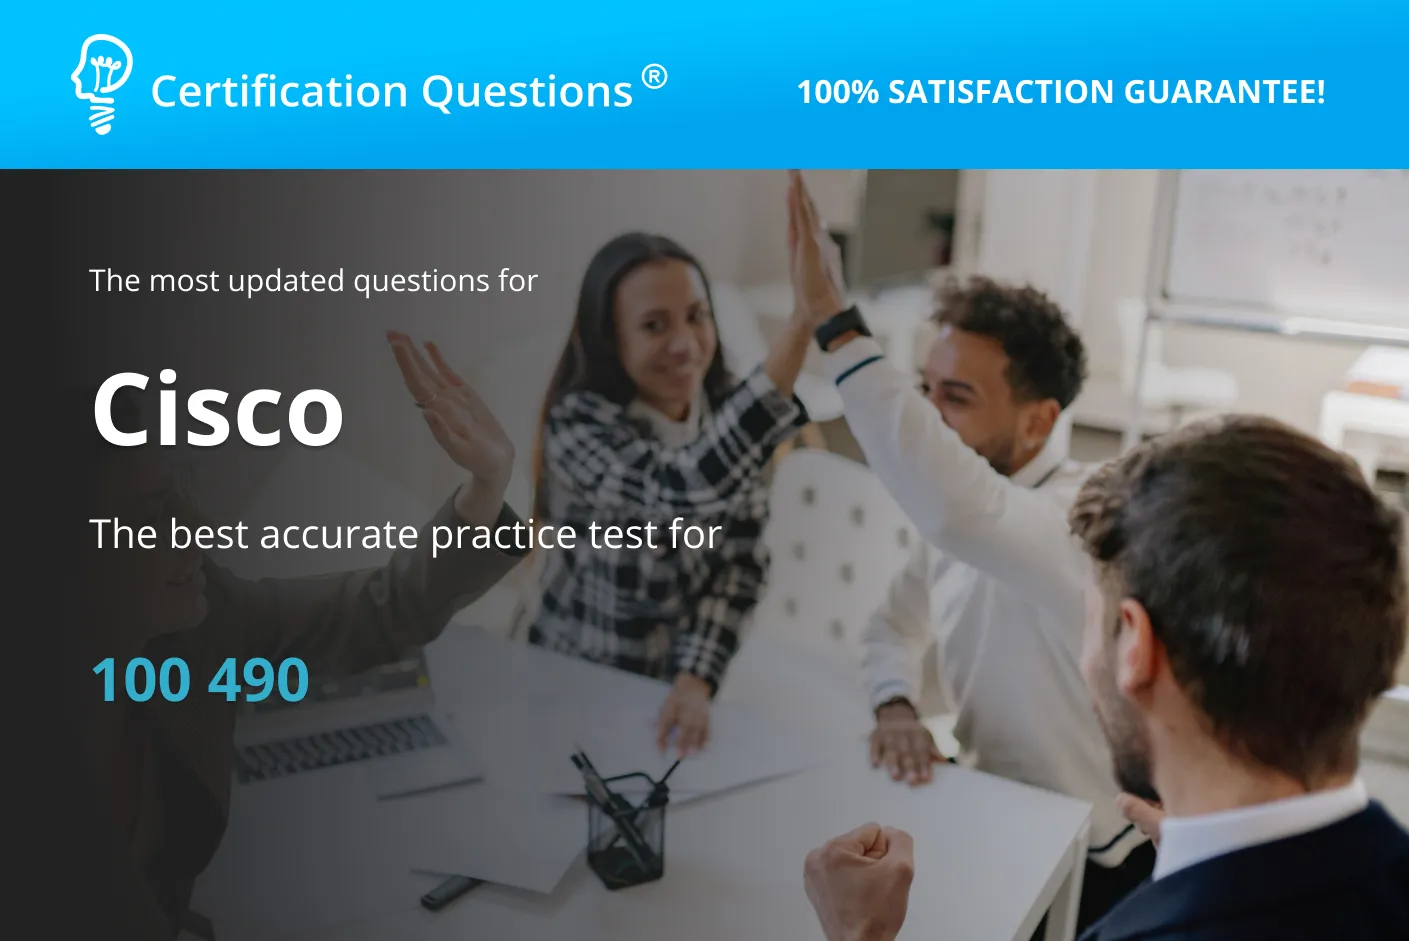 This image represents the Cisco 100 490 Practice Test